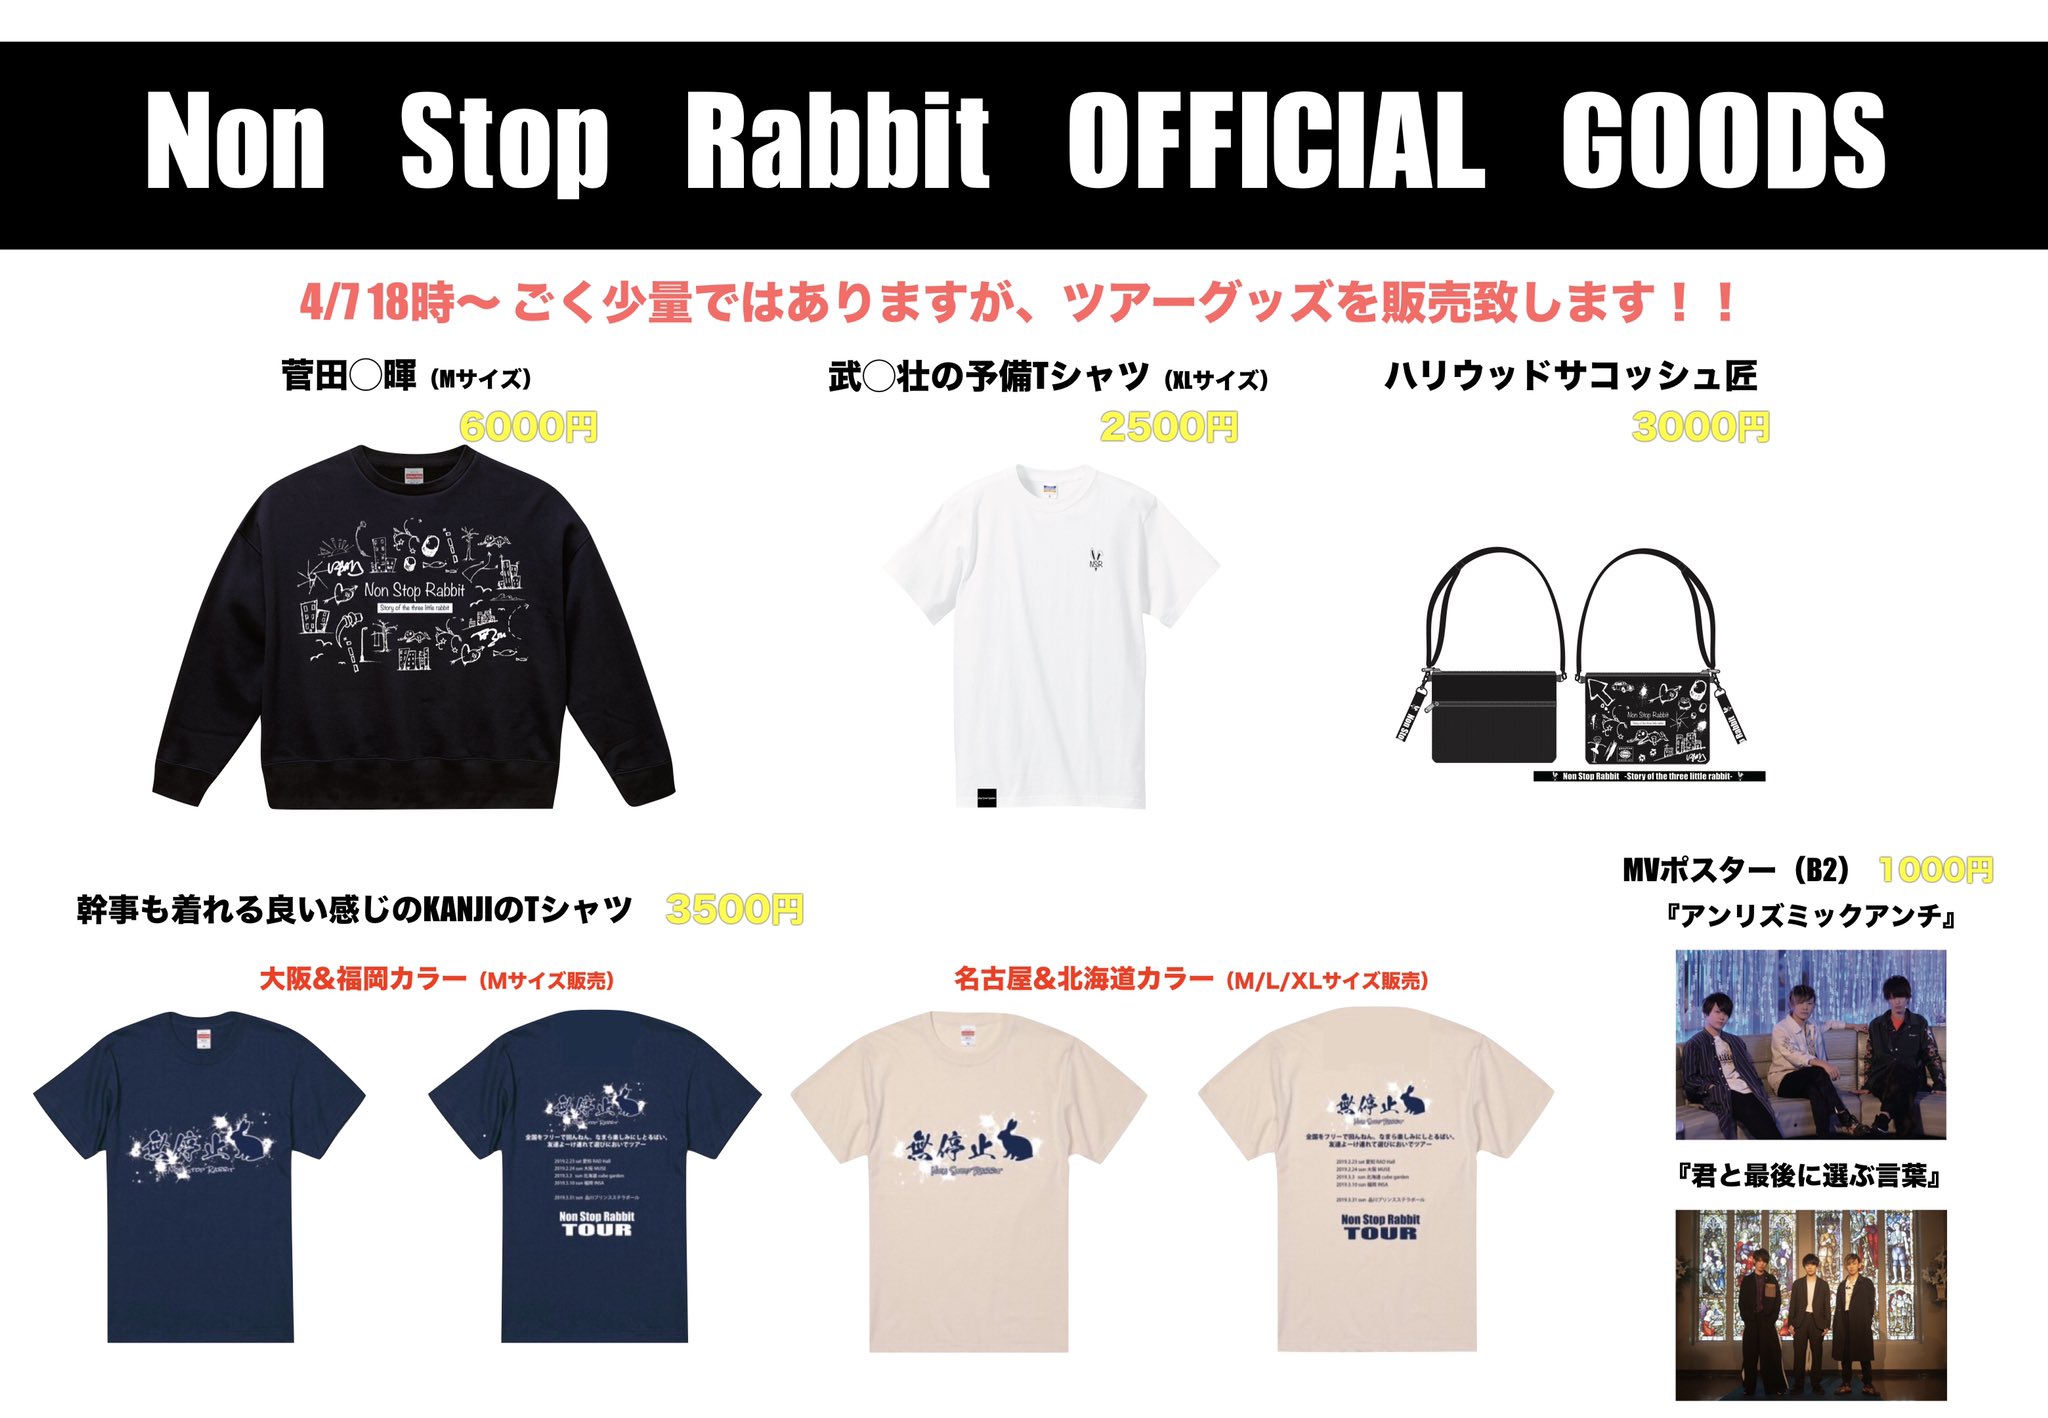 Non Stop Rabbit【ノンラビ】 on X: 